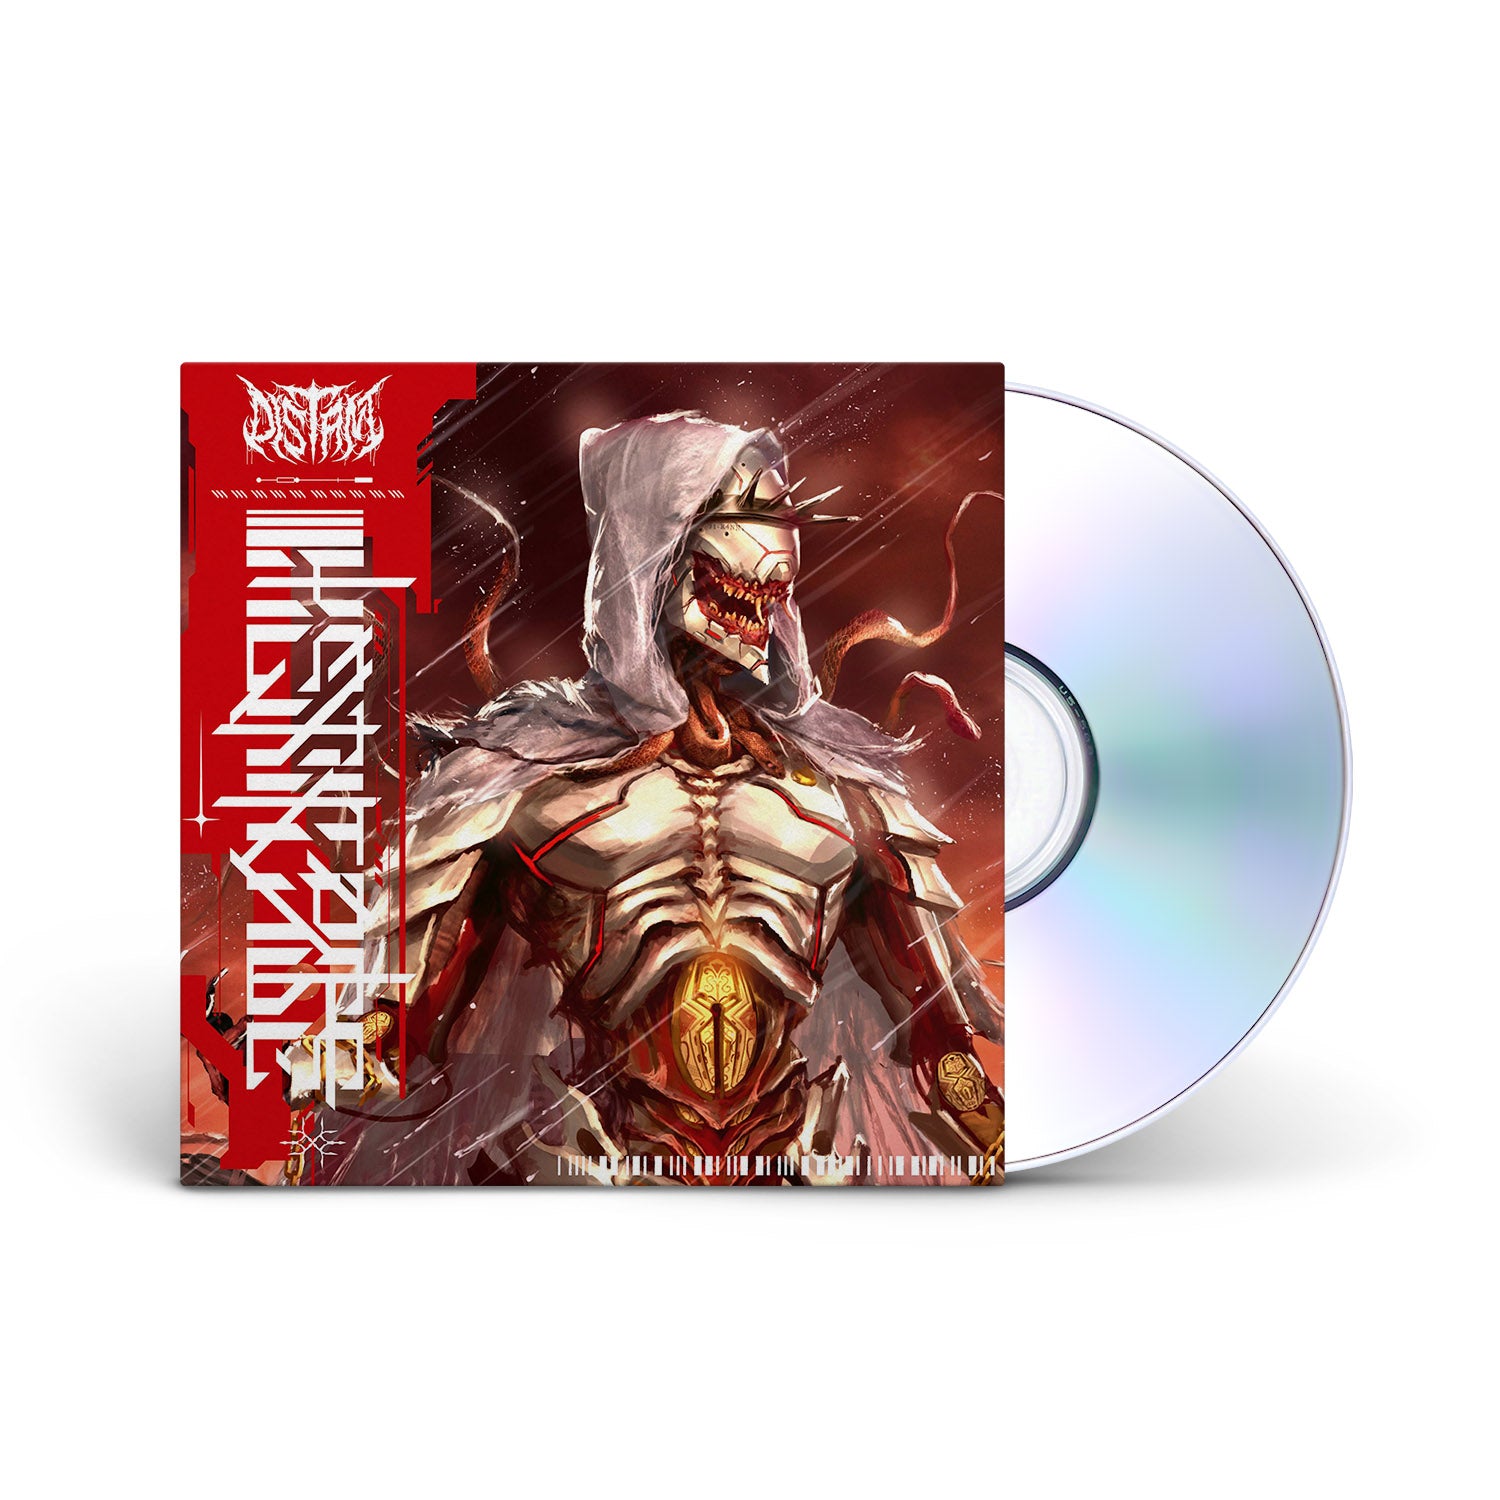 DISTANT - Heritage - Jewelcase CD